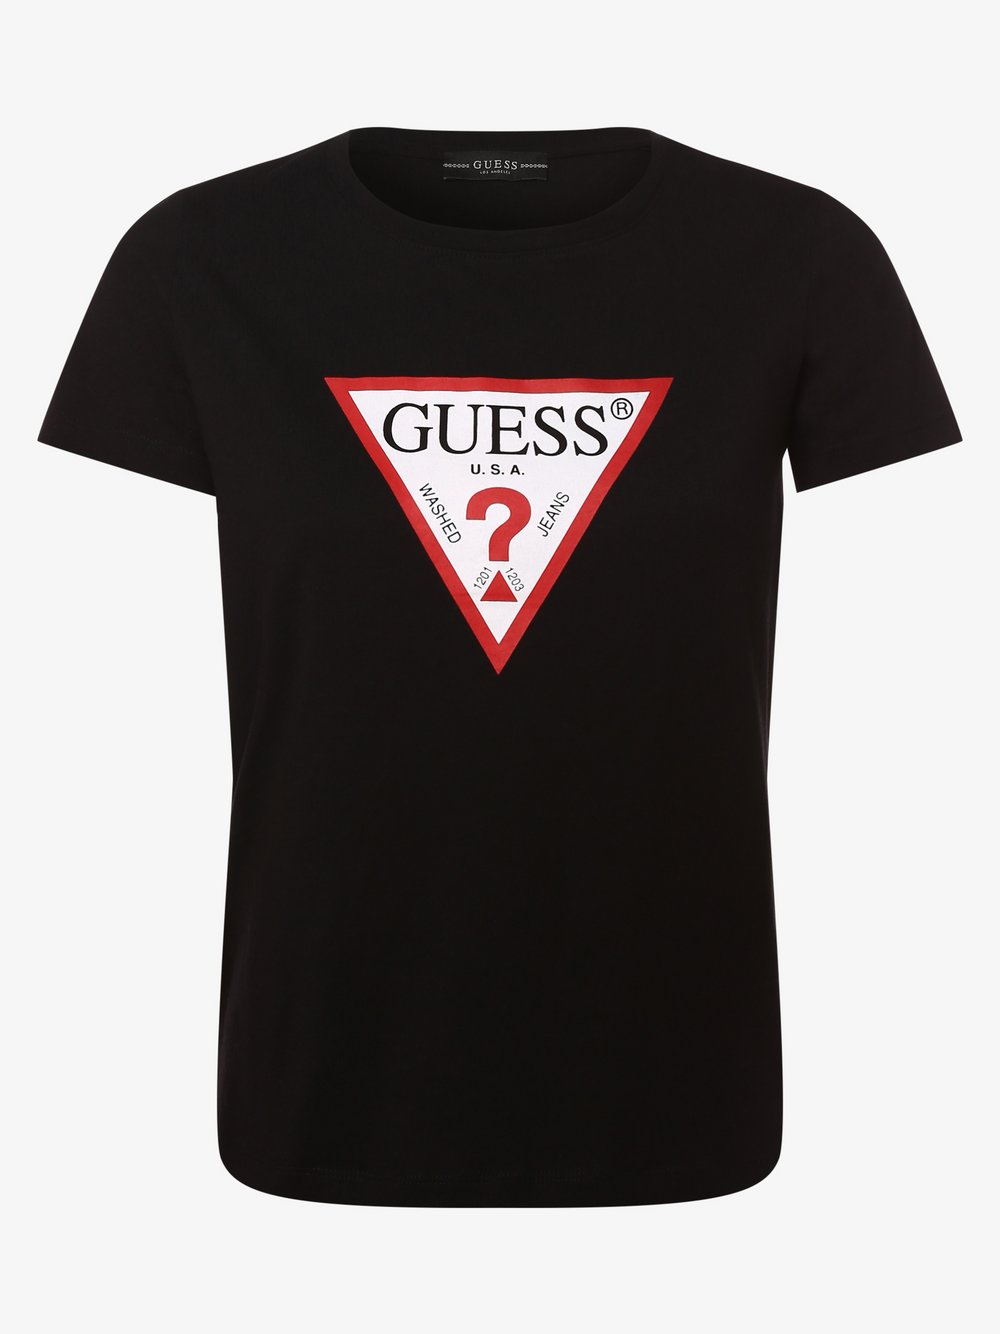 GUESS - T-shirt damski, czarny